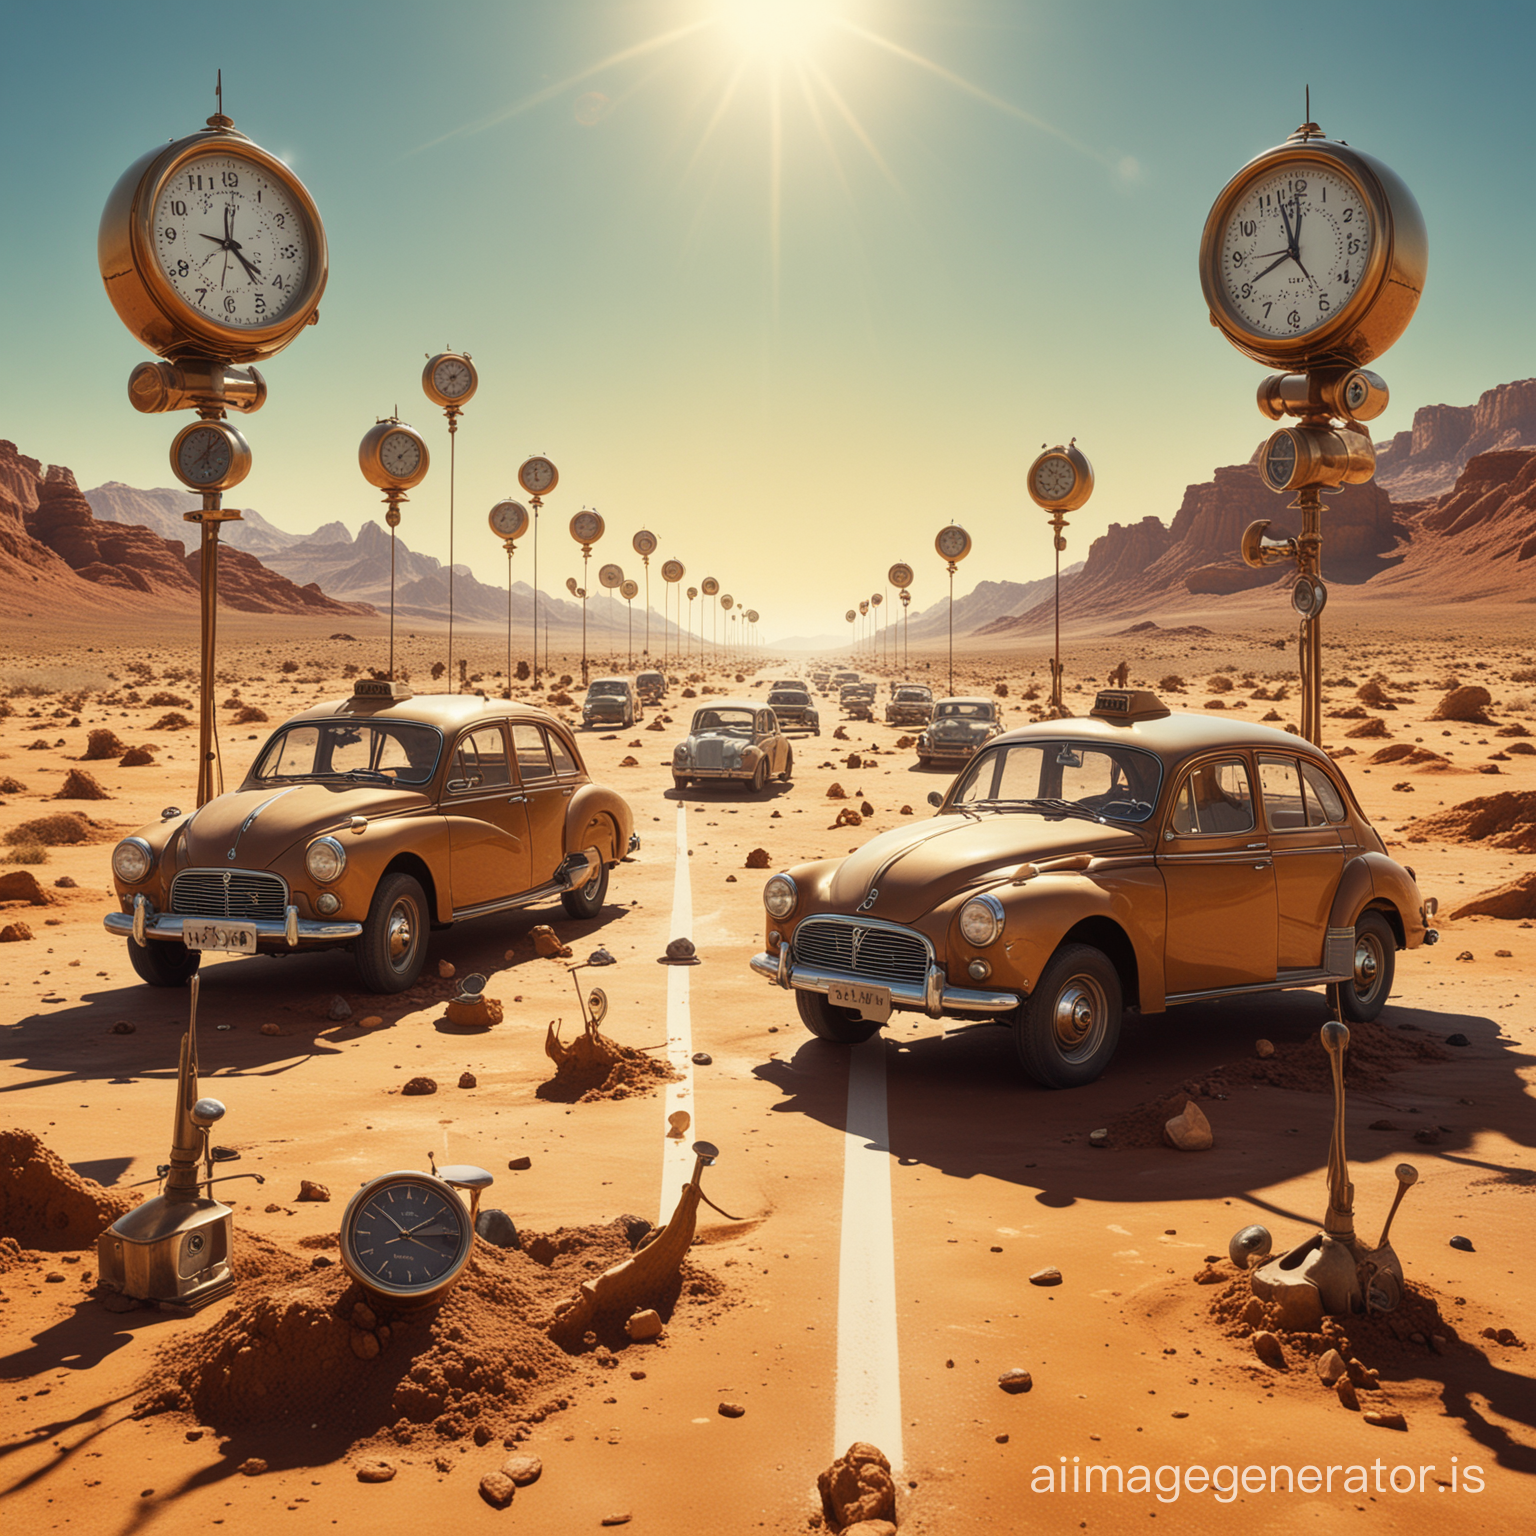 Dali-like surealist scene with car horns and clocks melting in the martian sunshine